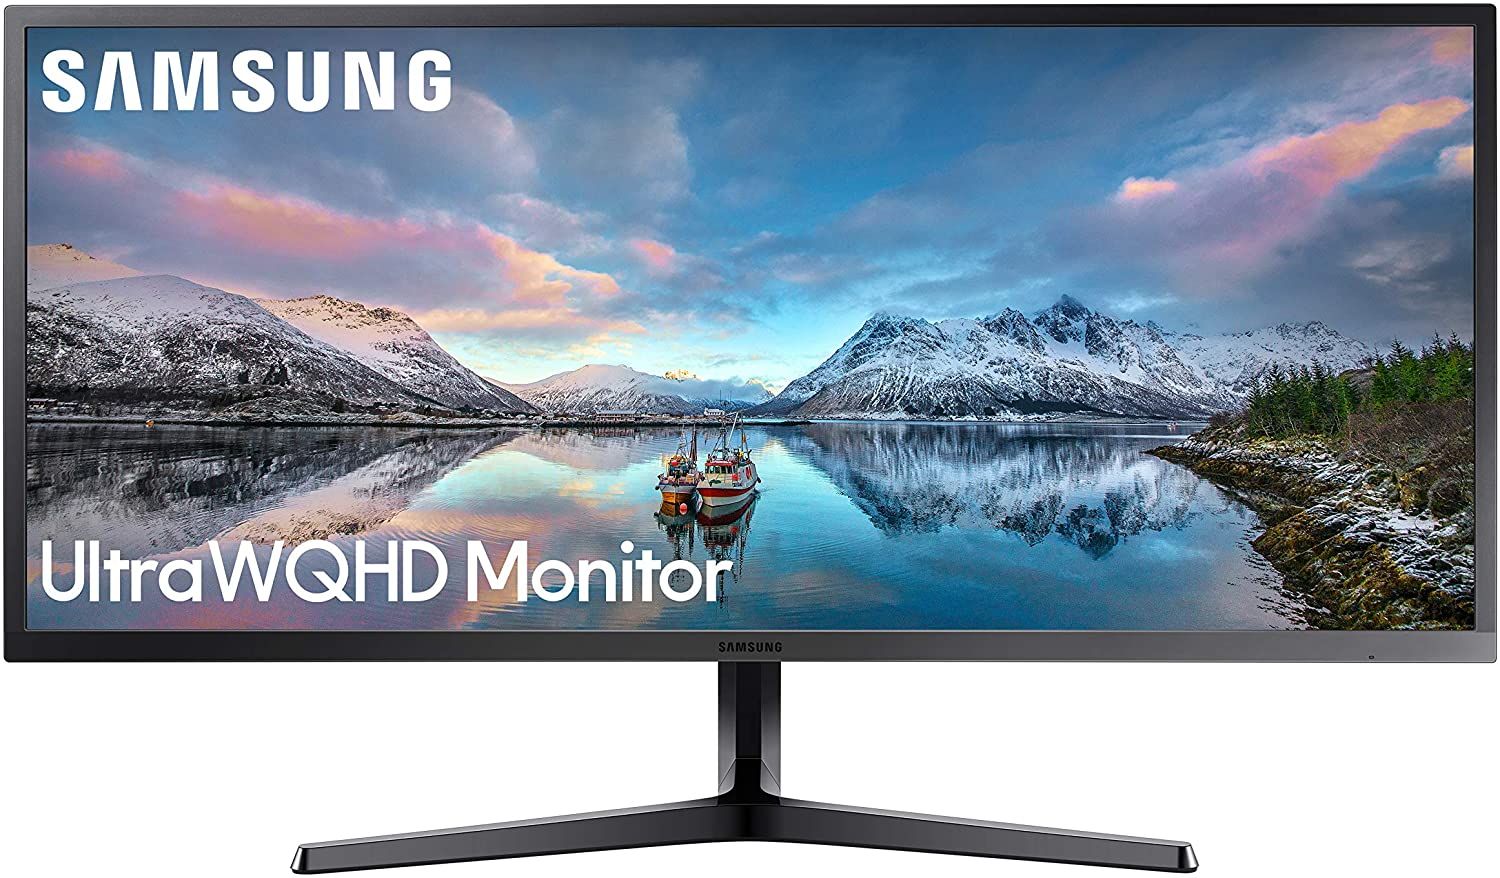 Samsung 34-inch Ultrawide Monitor